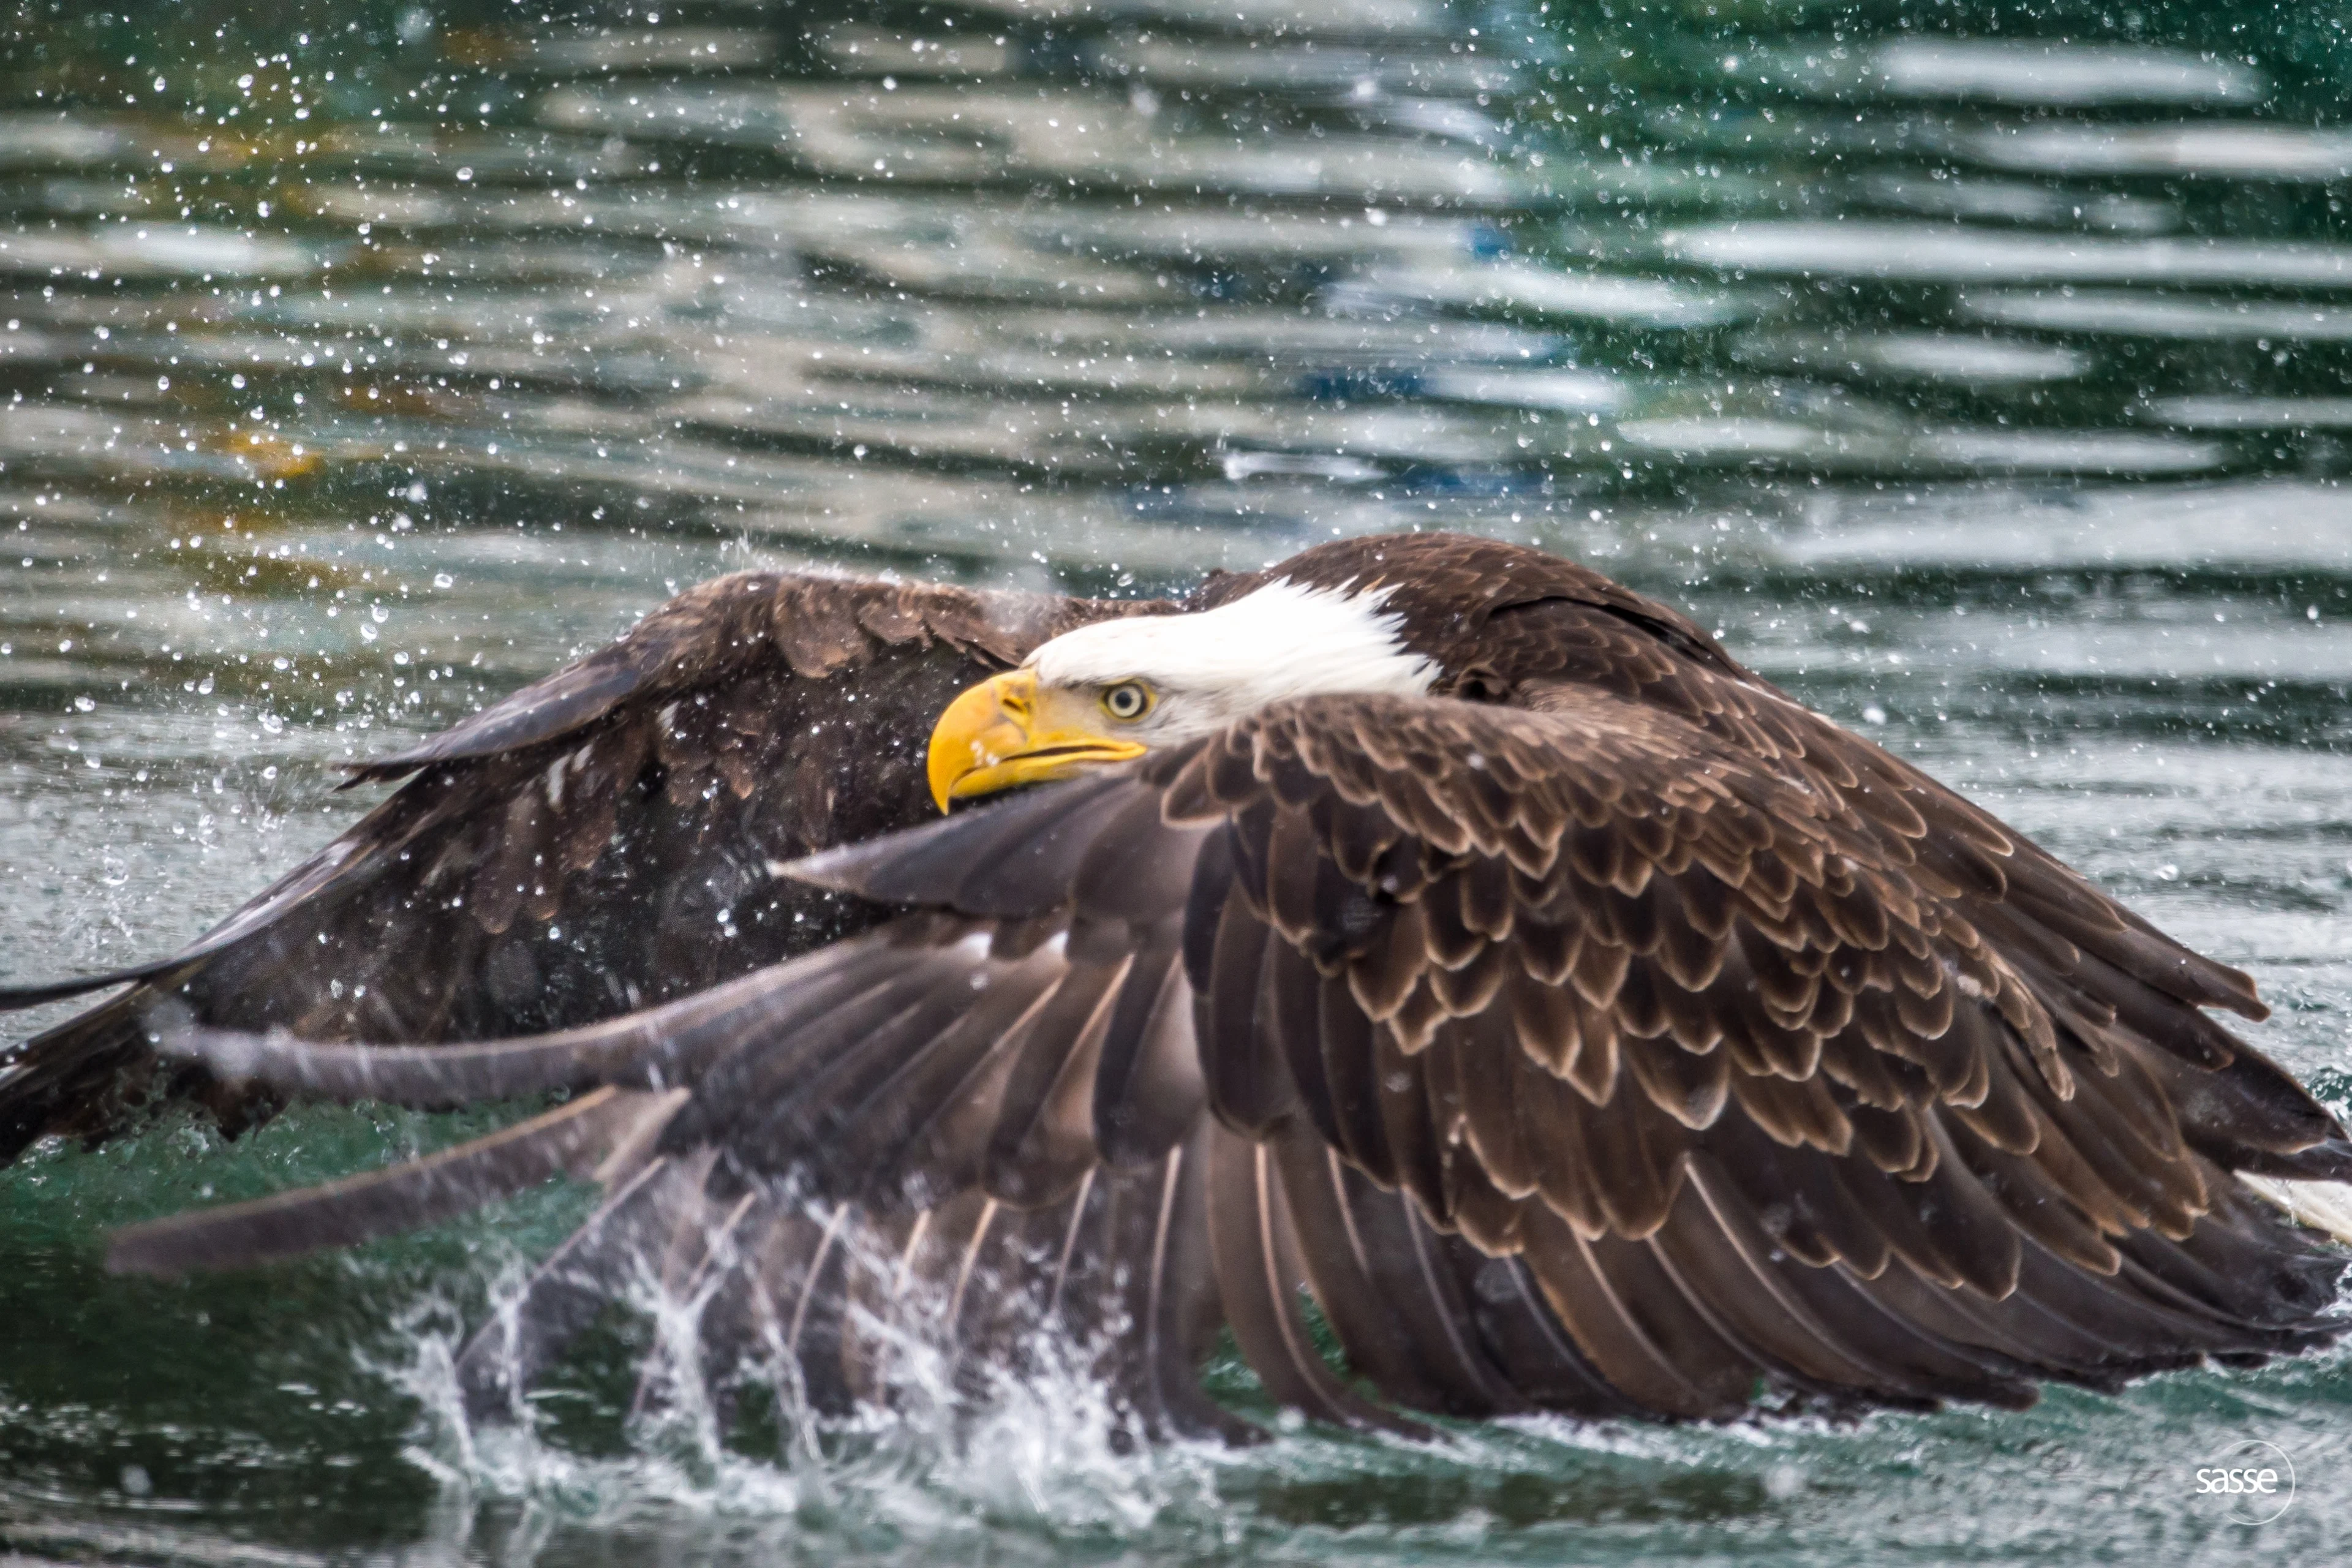 eagle - Christian Sasse - Dutch Harbour, Alaska - March 10, 2015